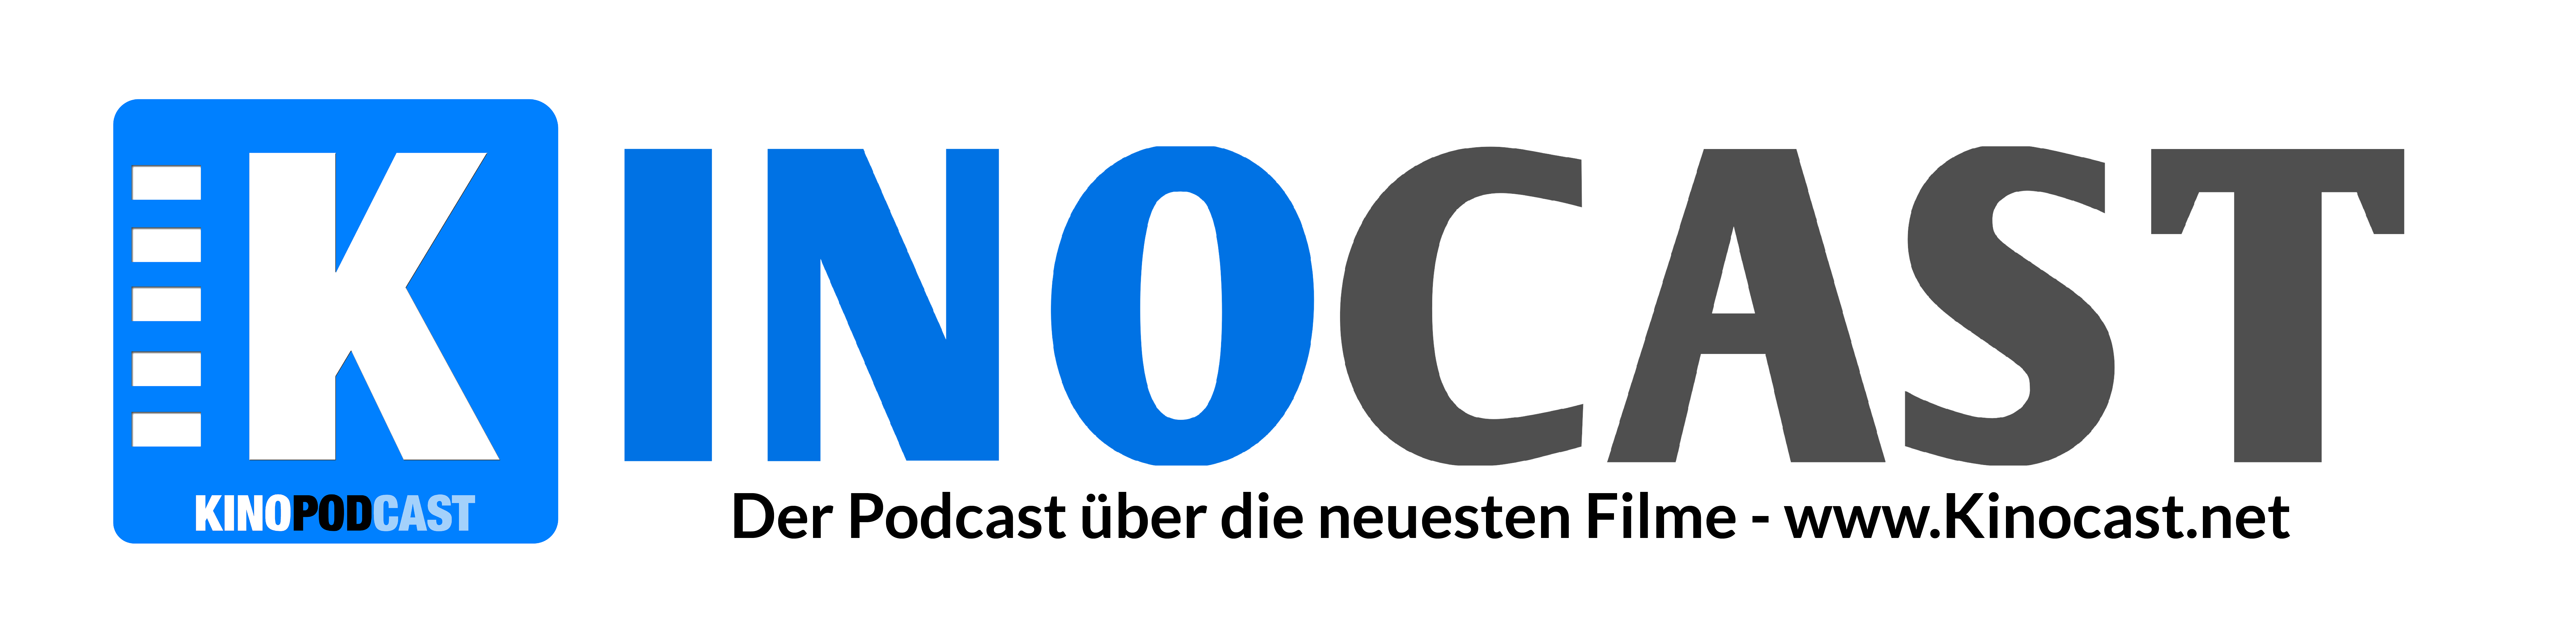 Kinocast Logo quer low Res